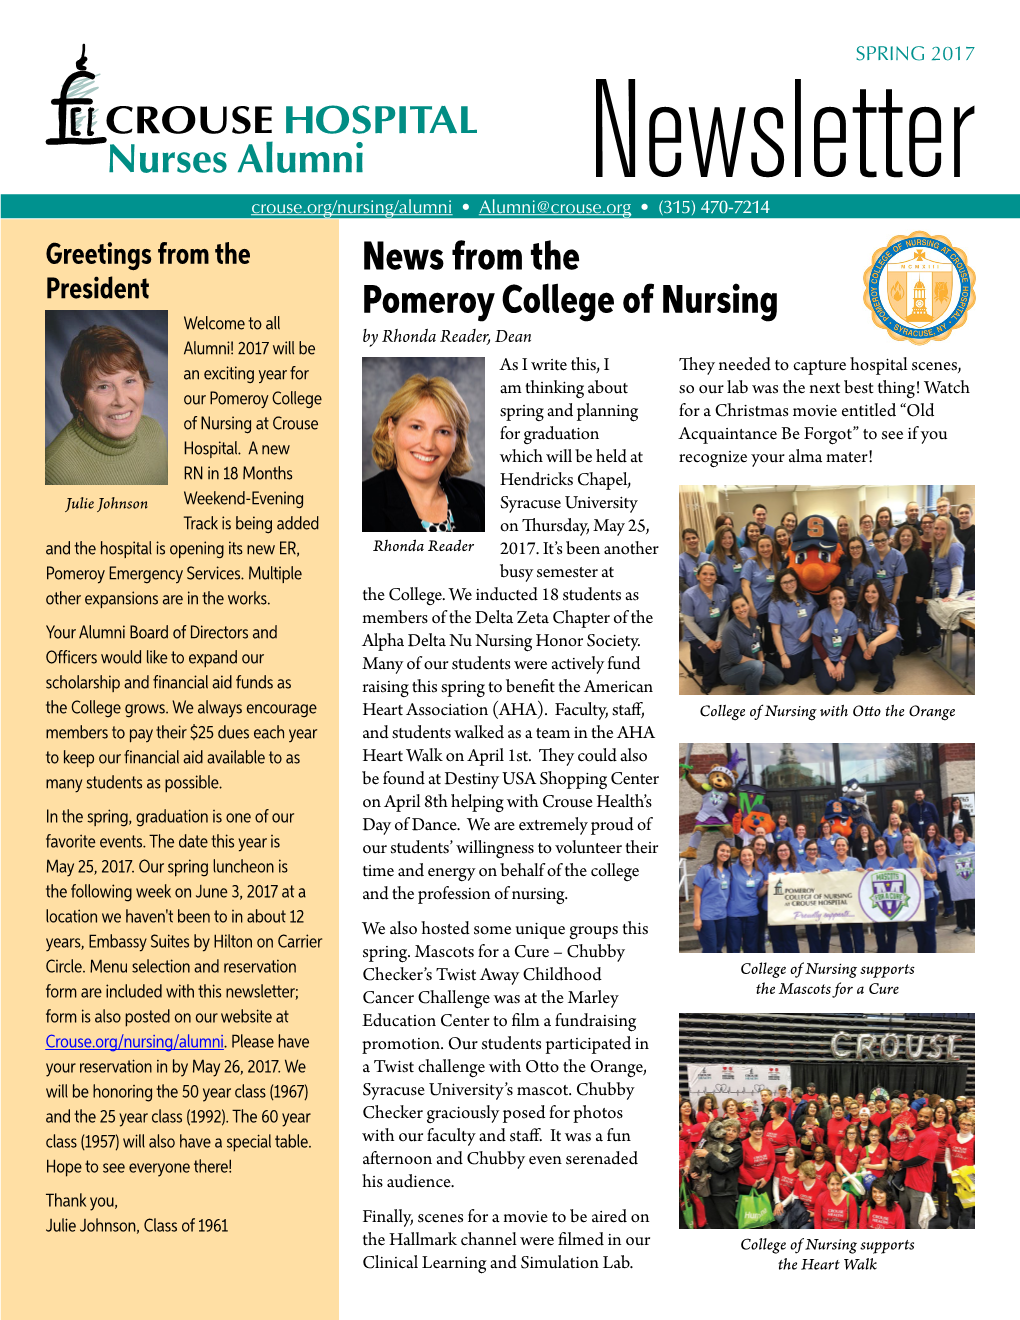 Nurses Alumni News from the Pomeroy College of Nursing